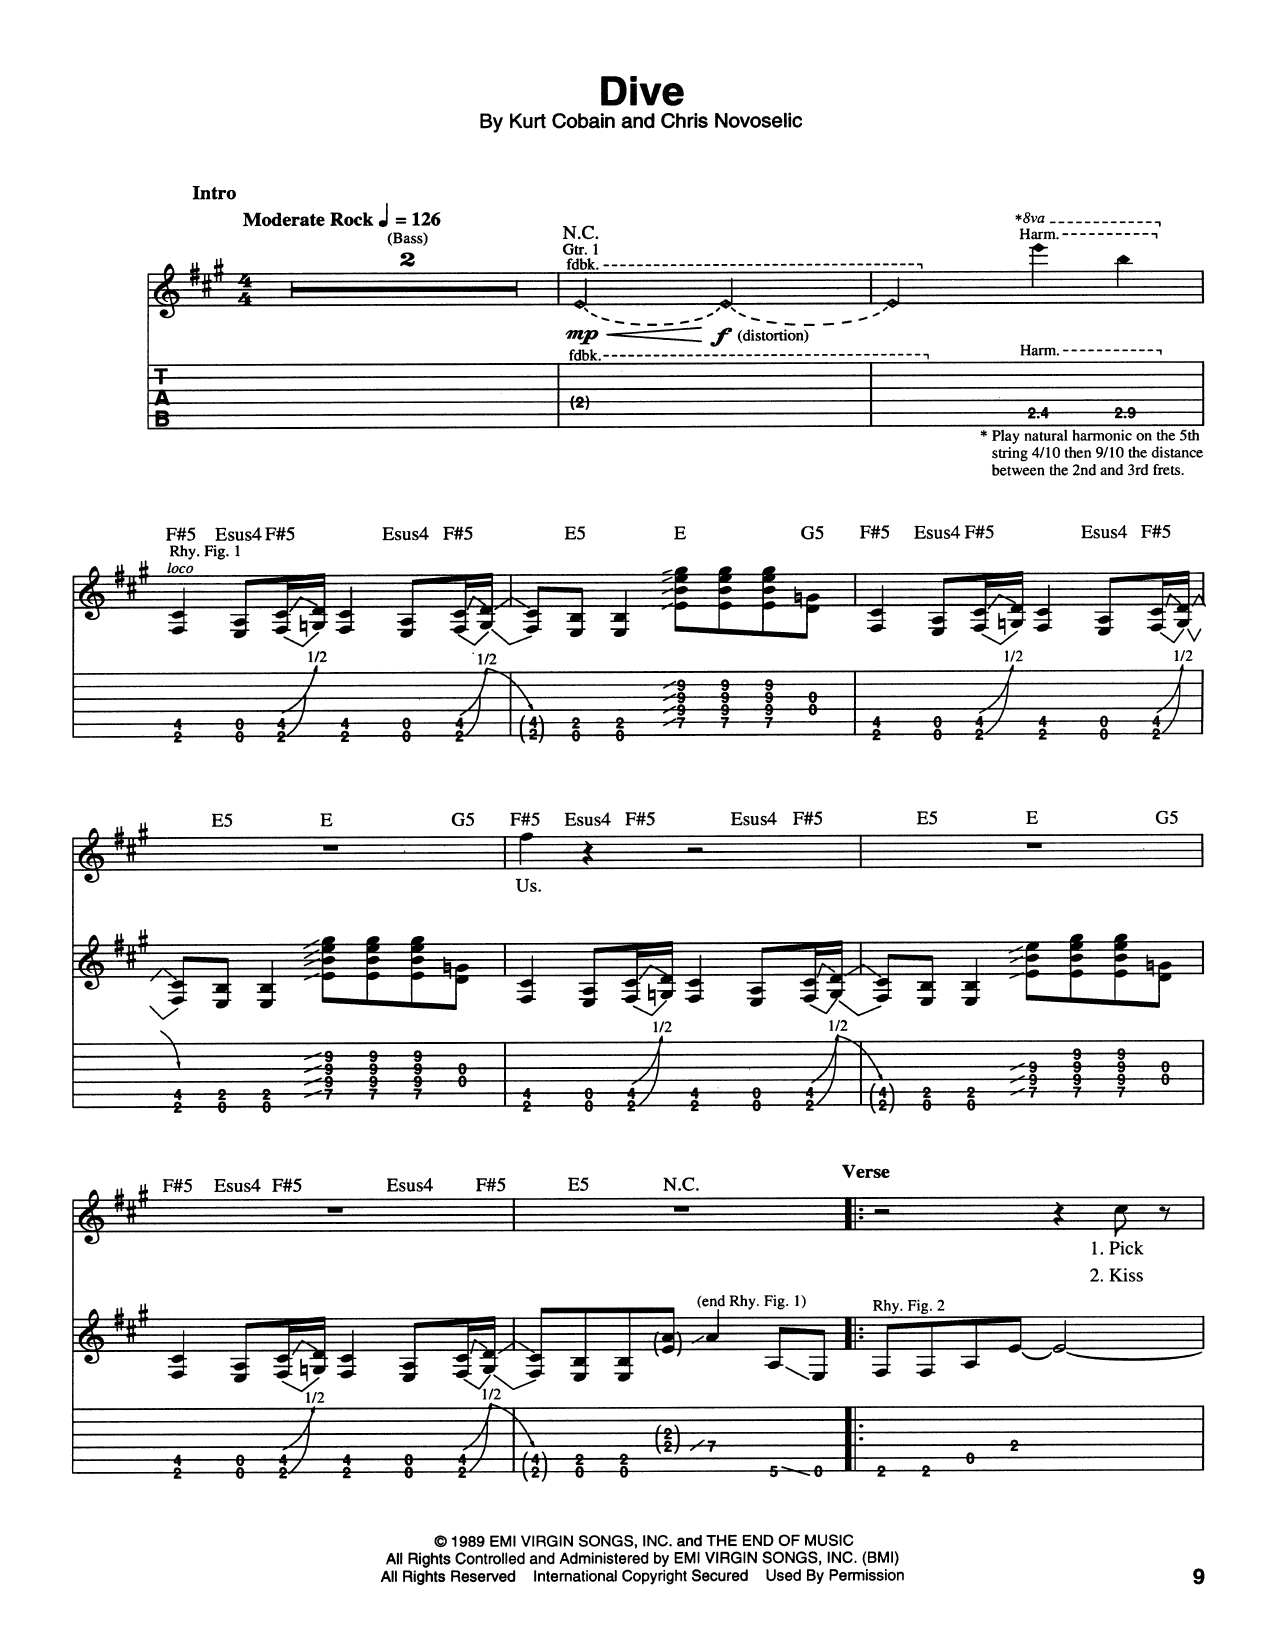 Nirvana Dive Sheet Music Notes & Chords for Guitar Tab - Download or Print PDF